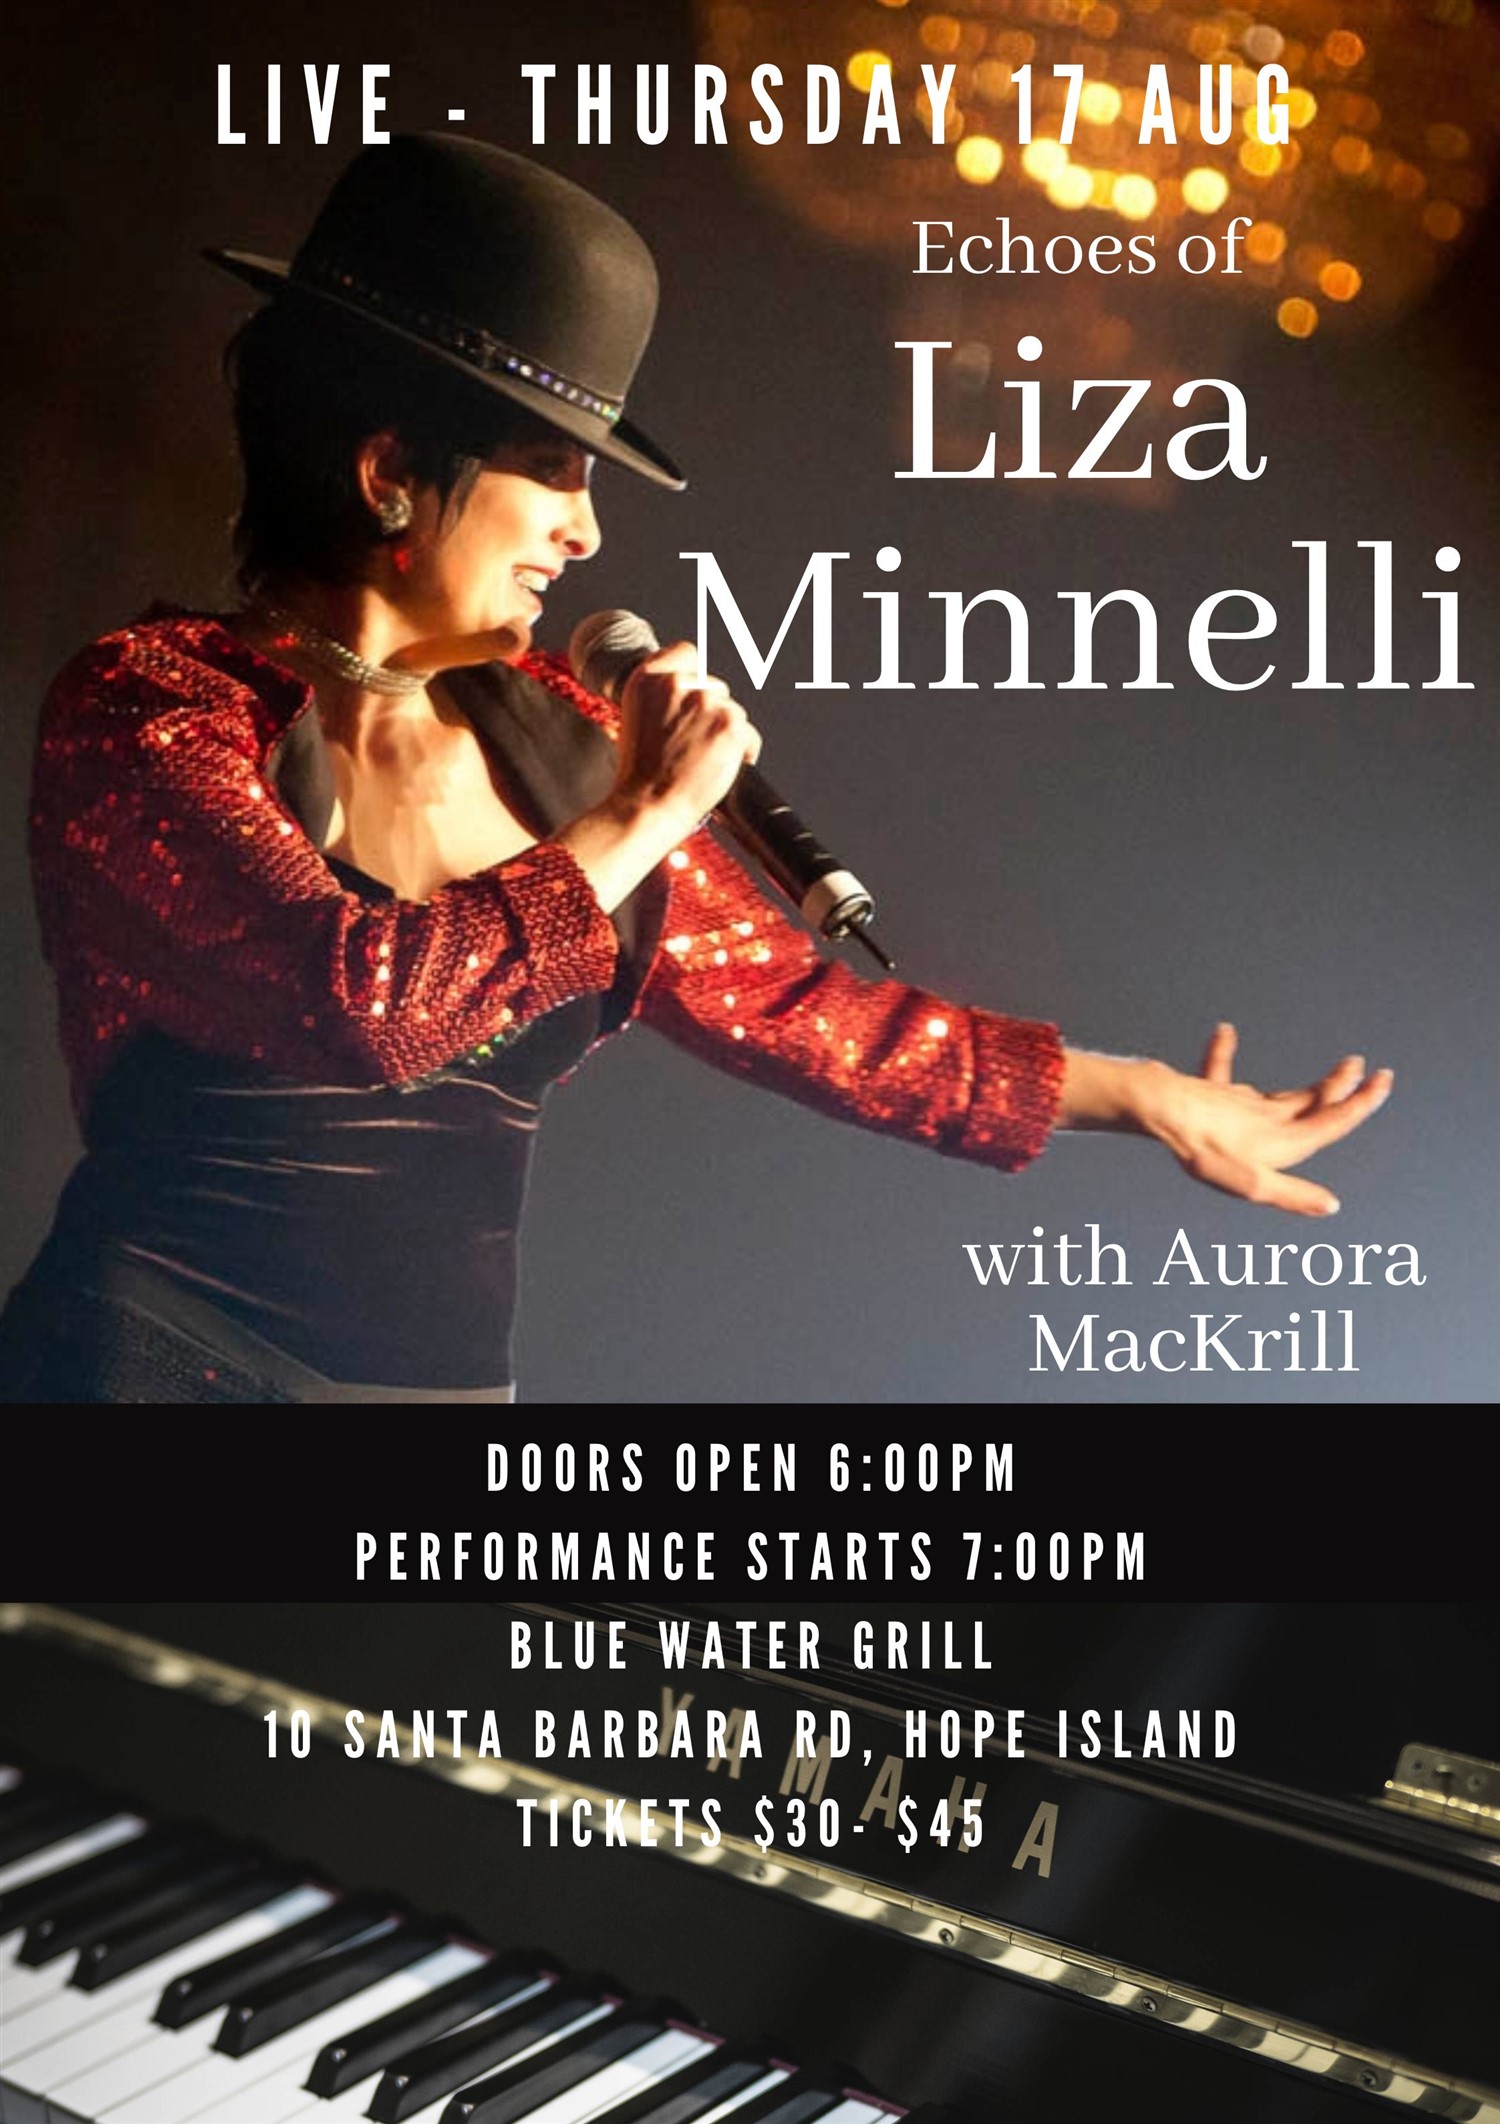 Echoes of LIZA MINNELLI with Aurora MacKrill  on Aug 17, 18:00@Hope Island Jazz - Blue Water Grill - Buy tickets and Get information on Hope Island Jazz hopeislandjazz.com.au